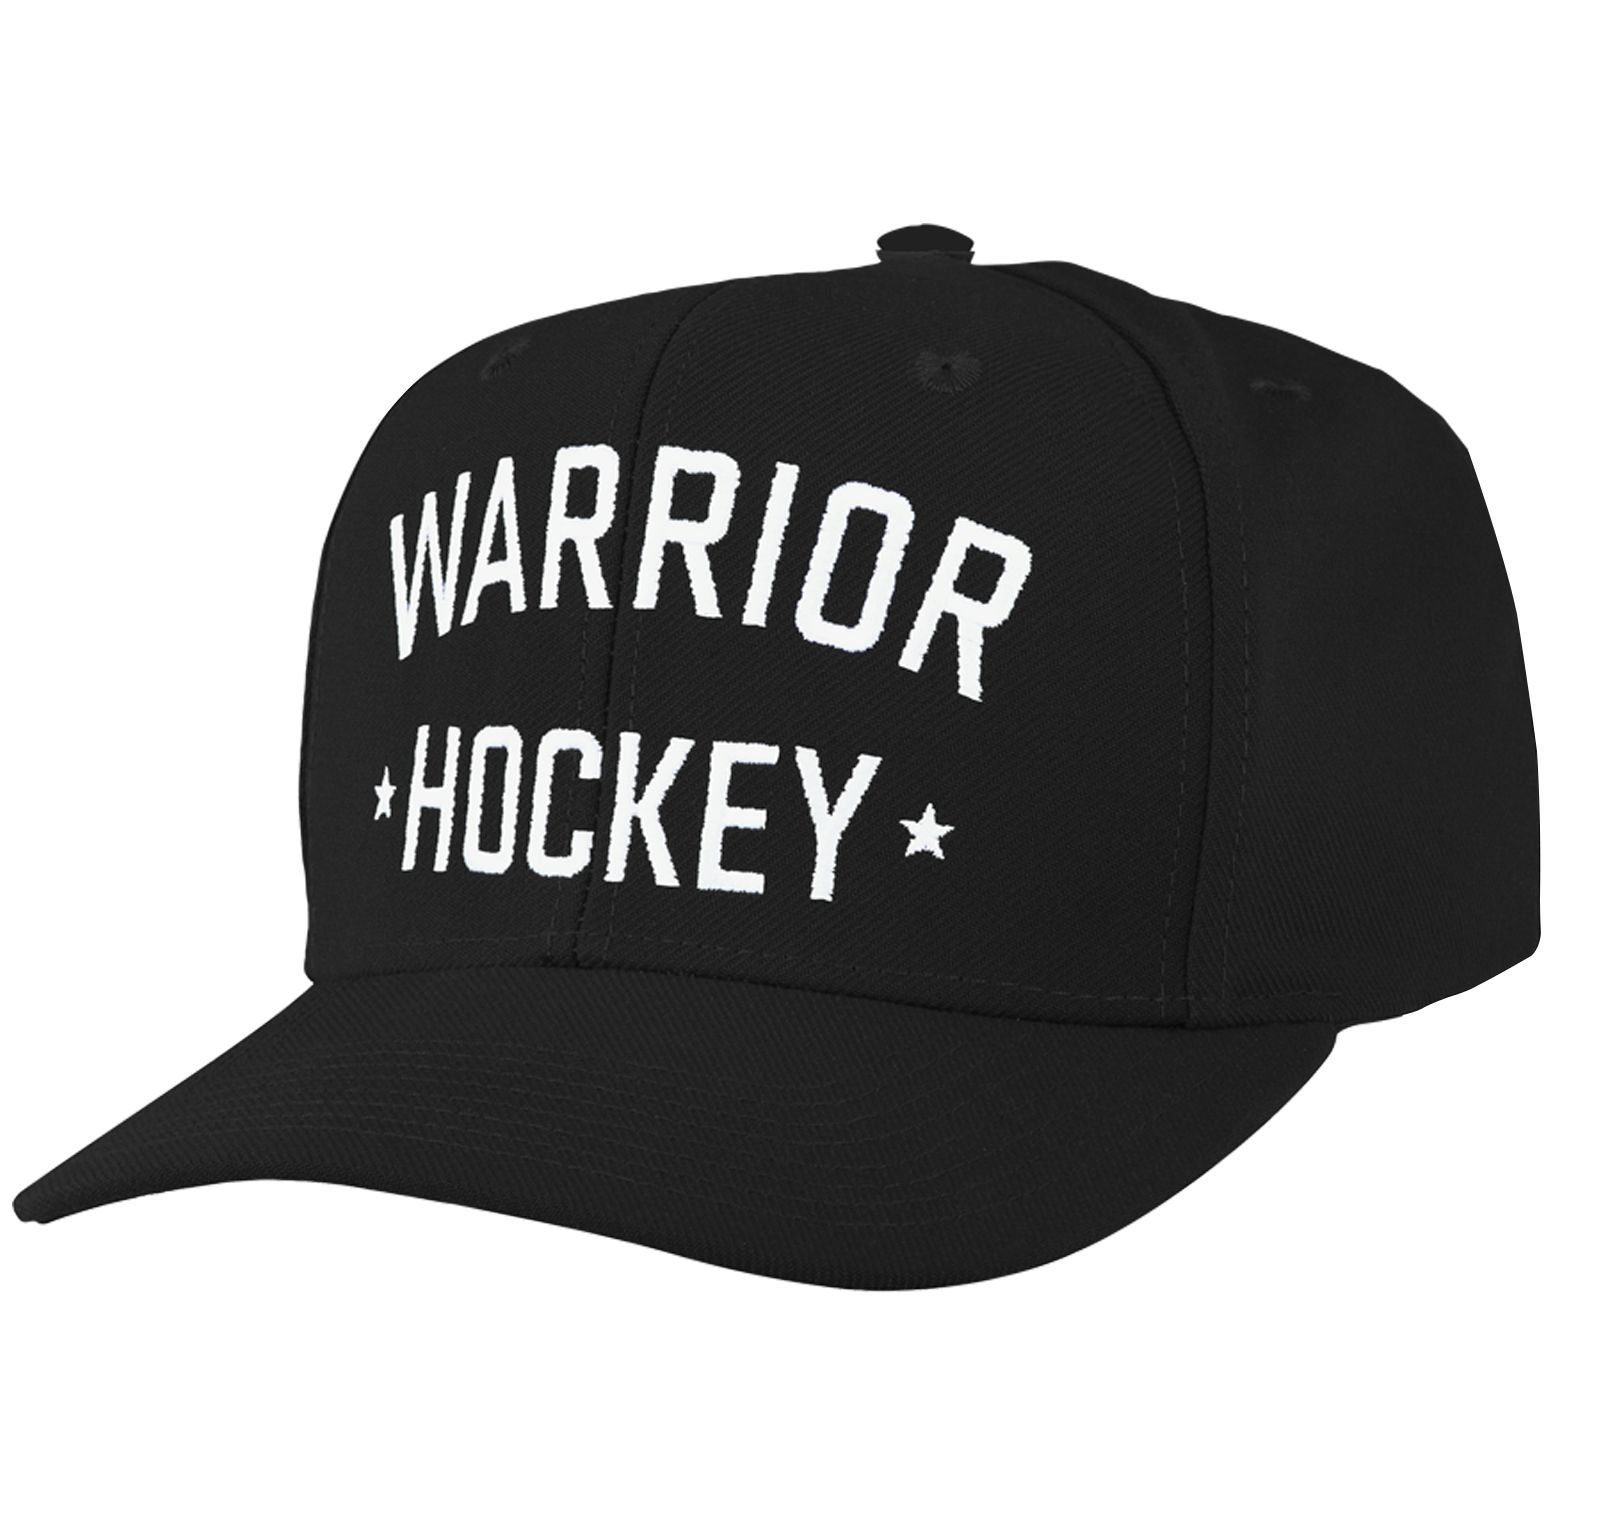 Warrior Hockey Street Snapback Hat, Black image number 0